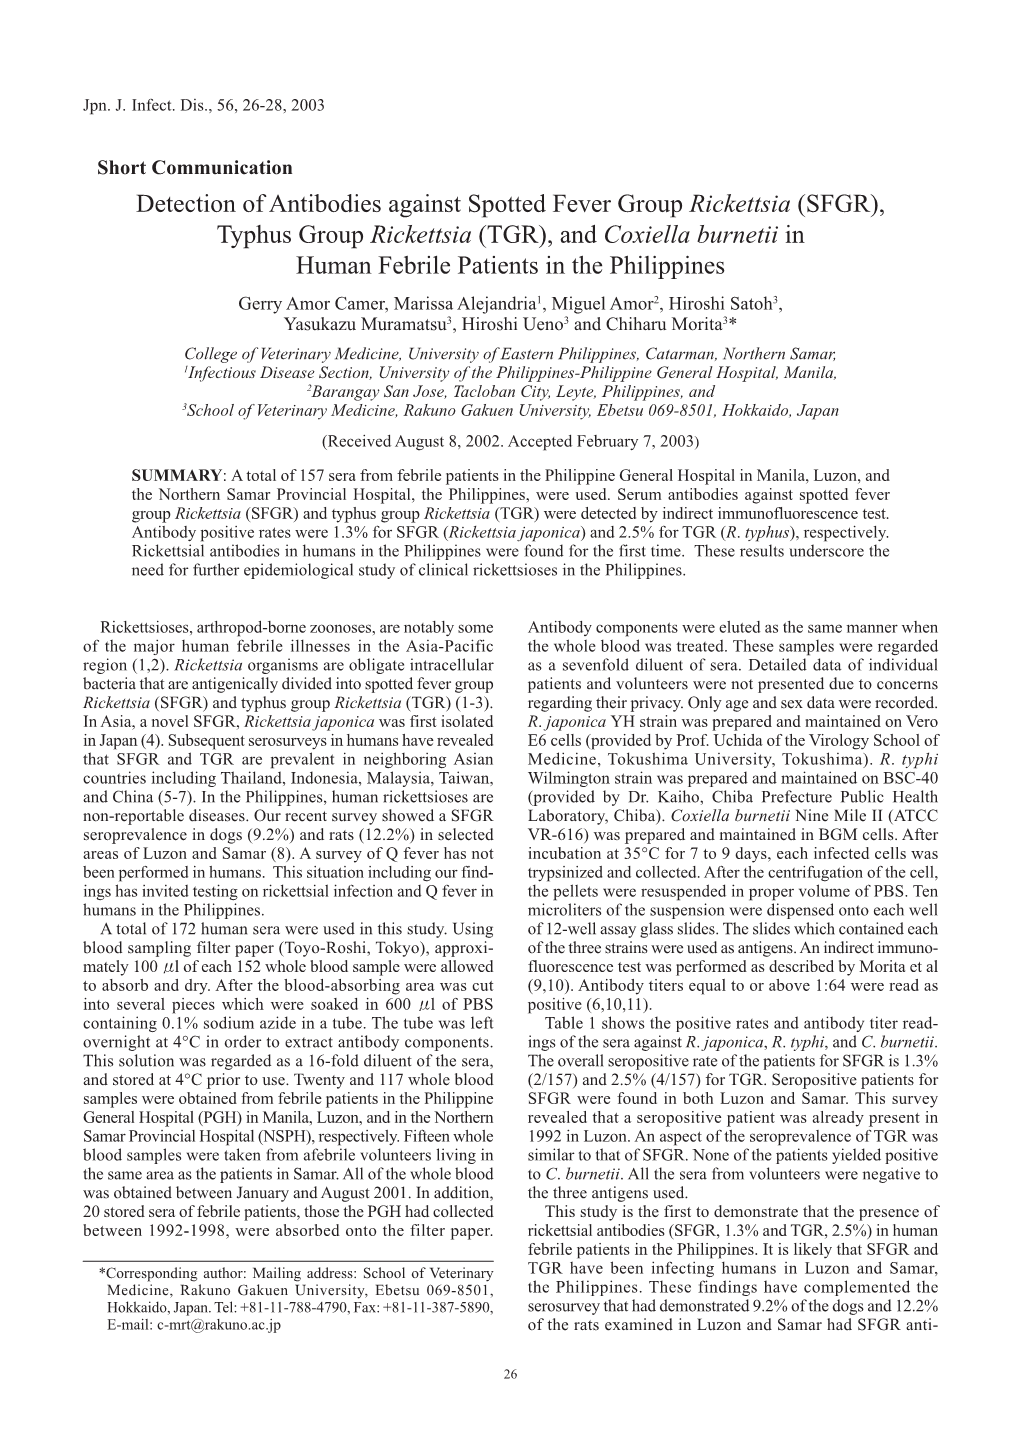 (SFGR), Typhus Group Rickettsia (TGR), and Coxiella Burnetii in H